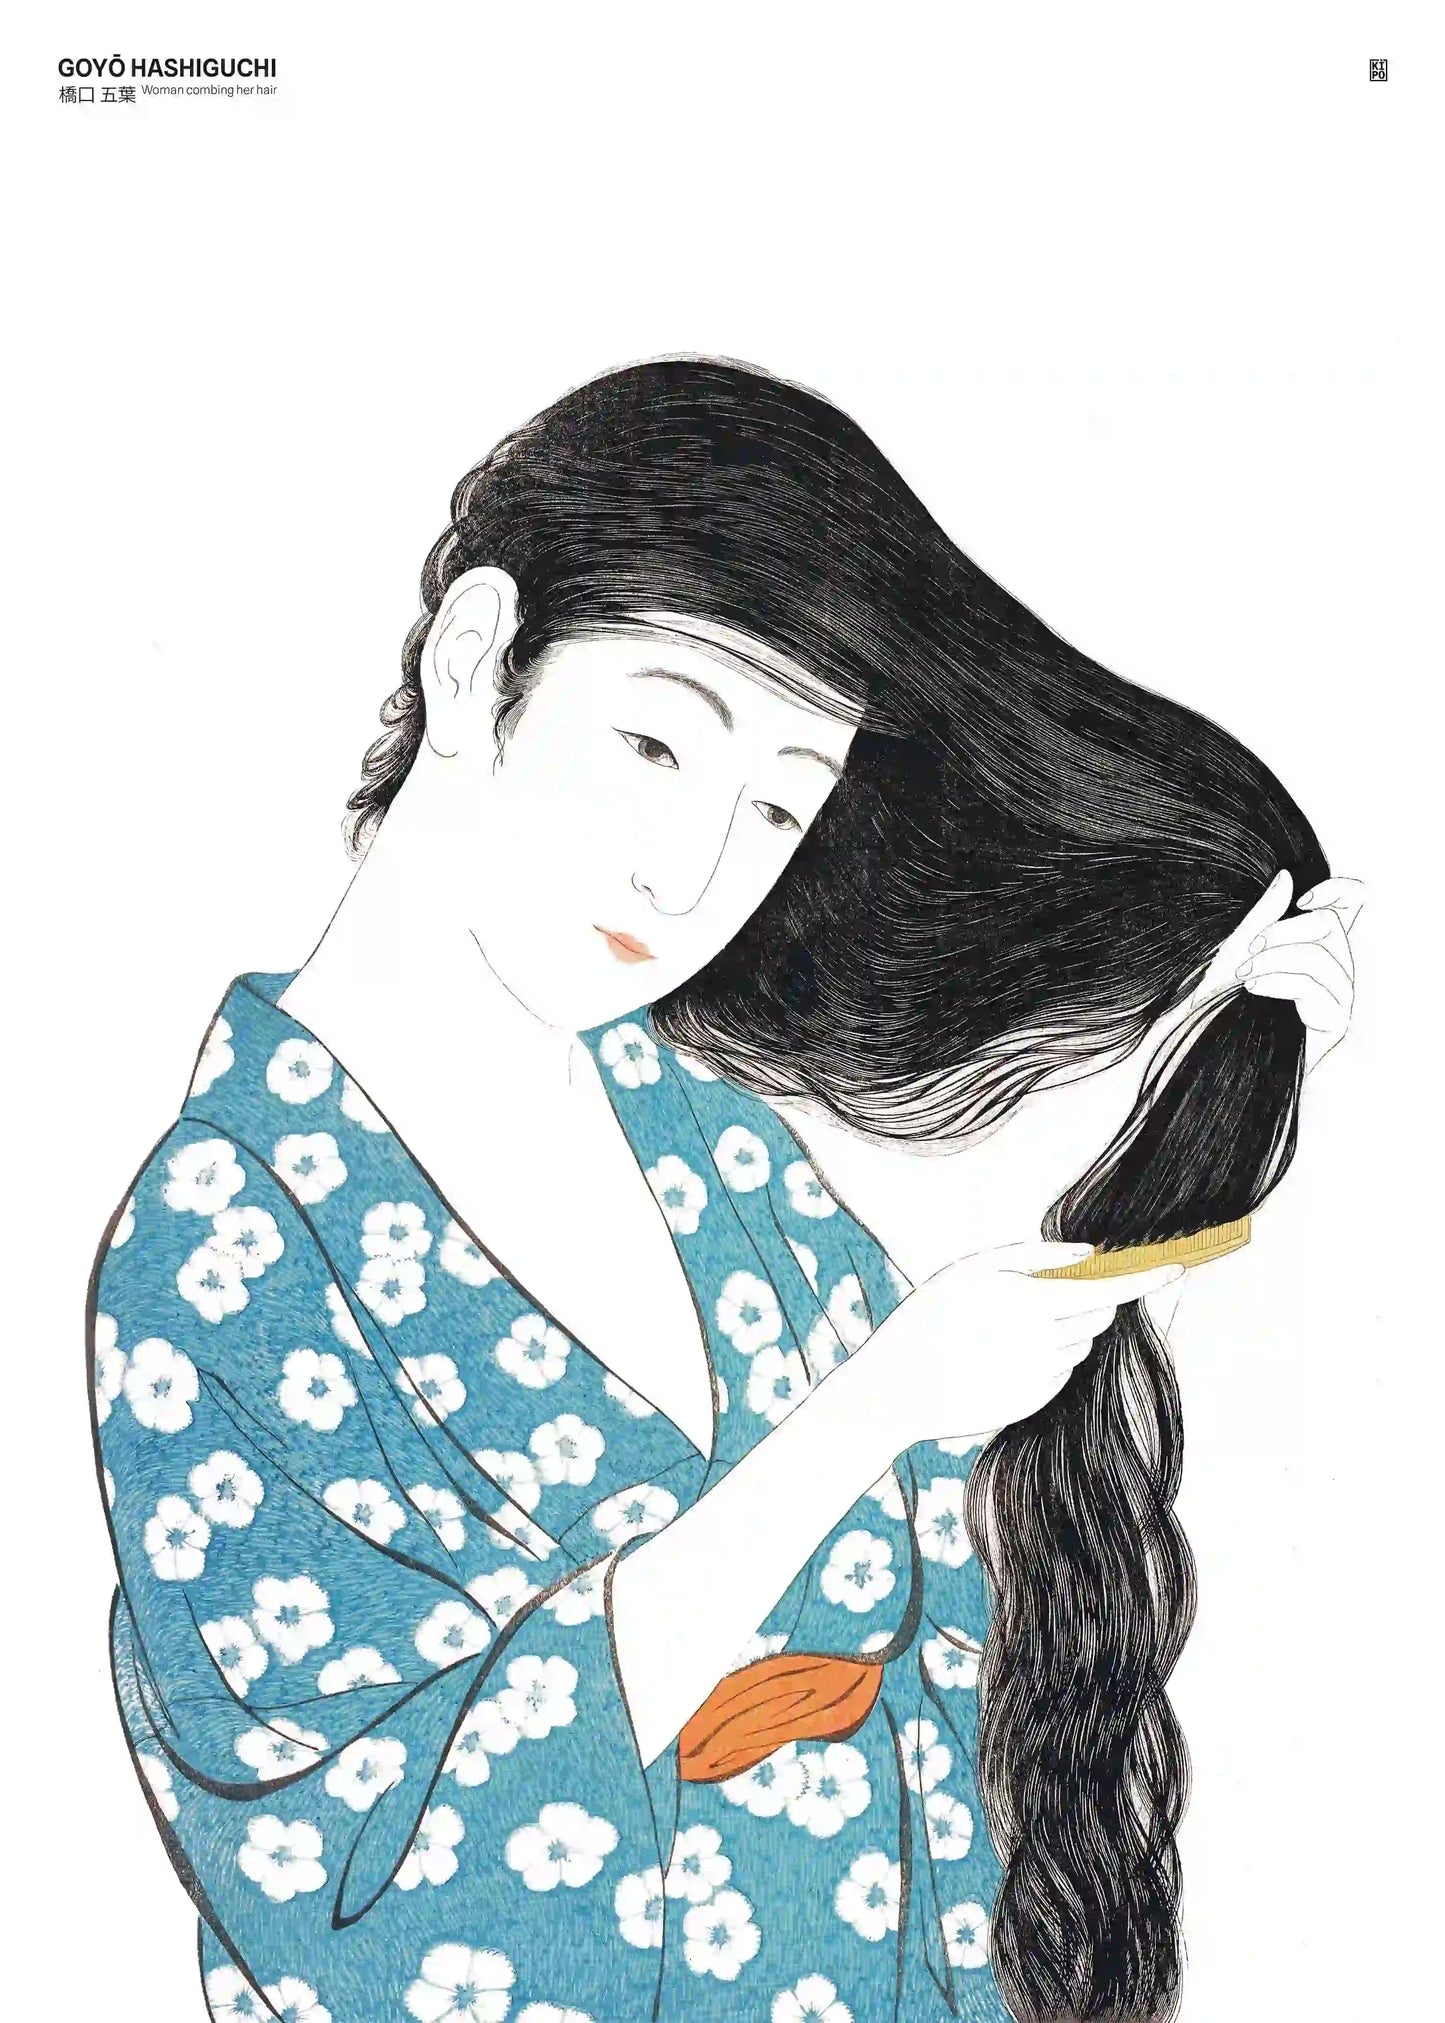 Goyō Hashiguchi - Woman combing her hair (1920)